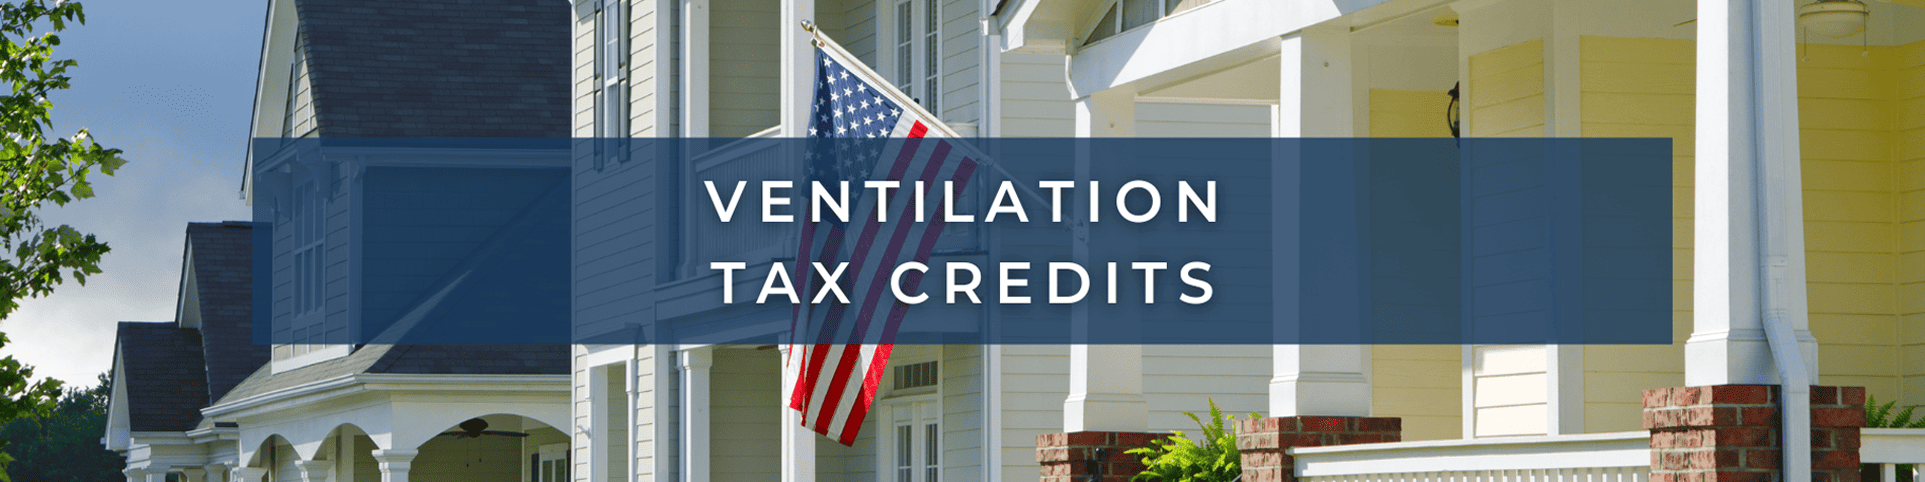 Ventilation Tax Credits